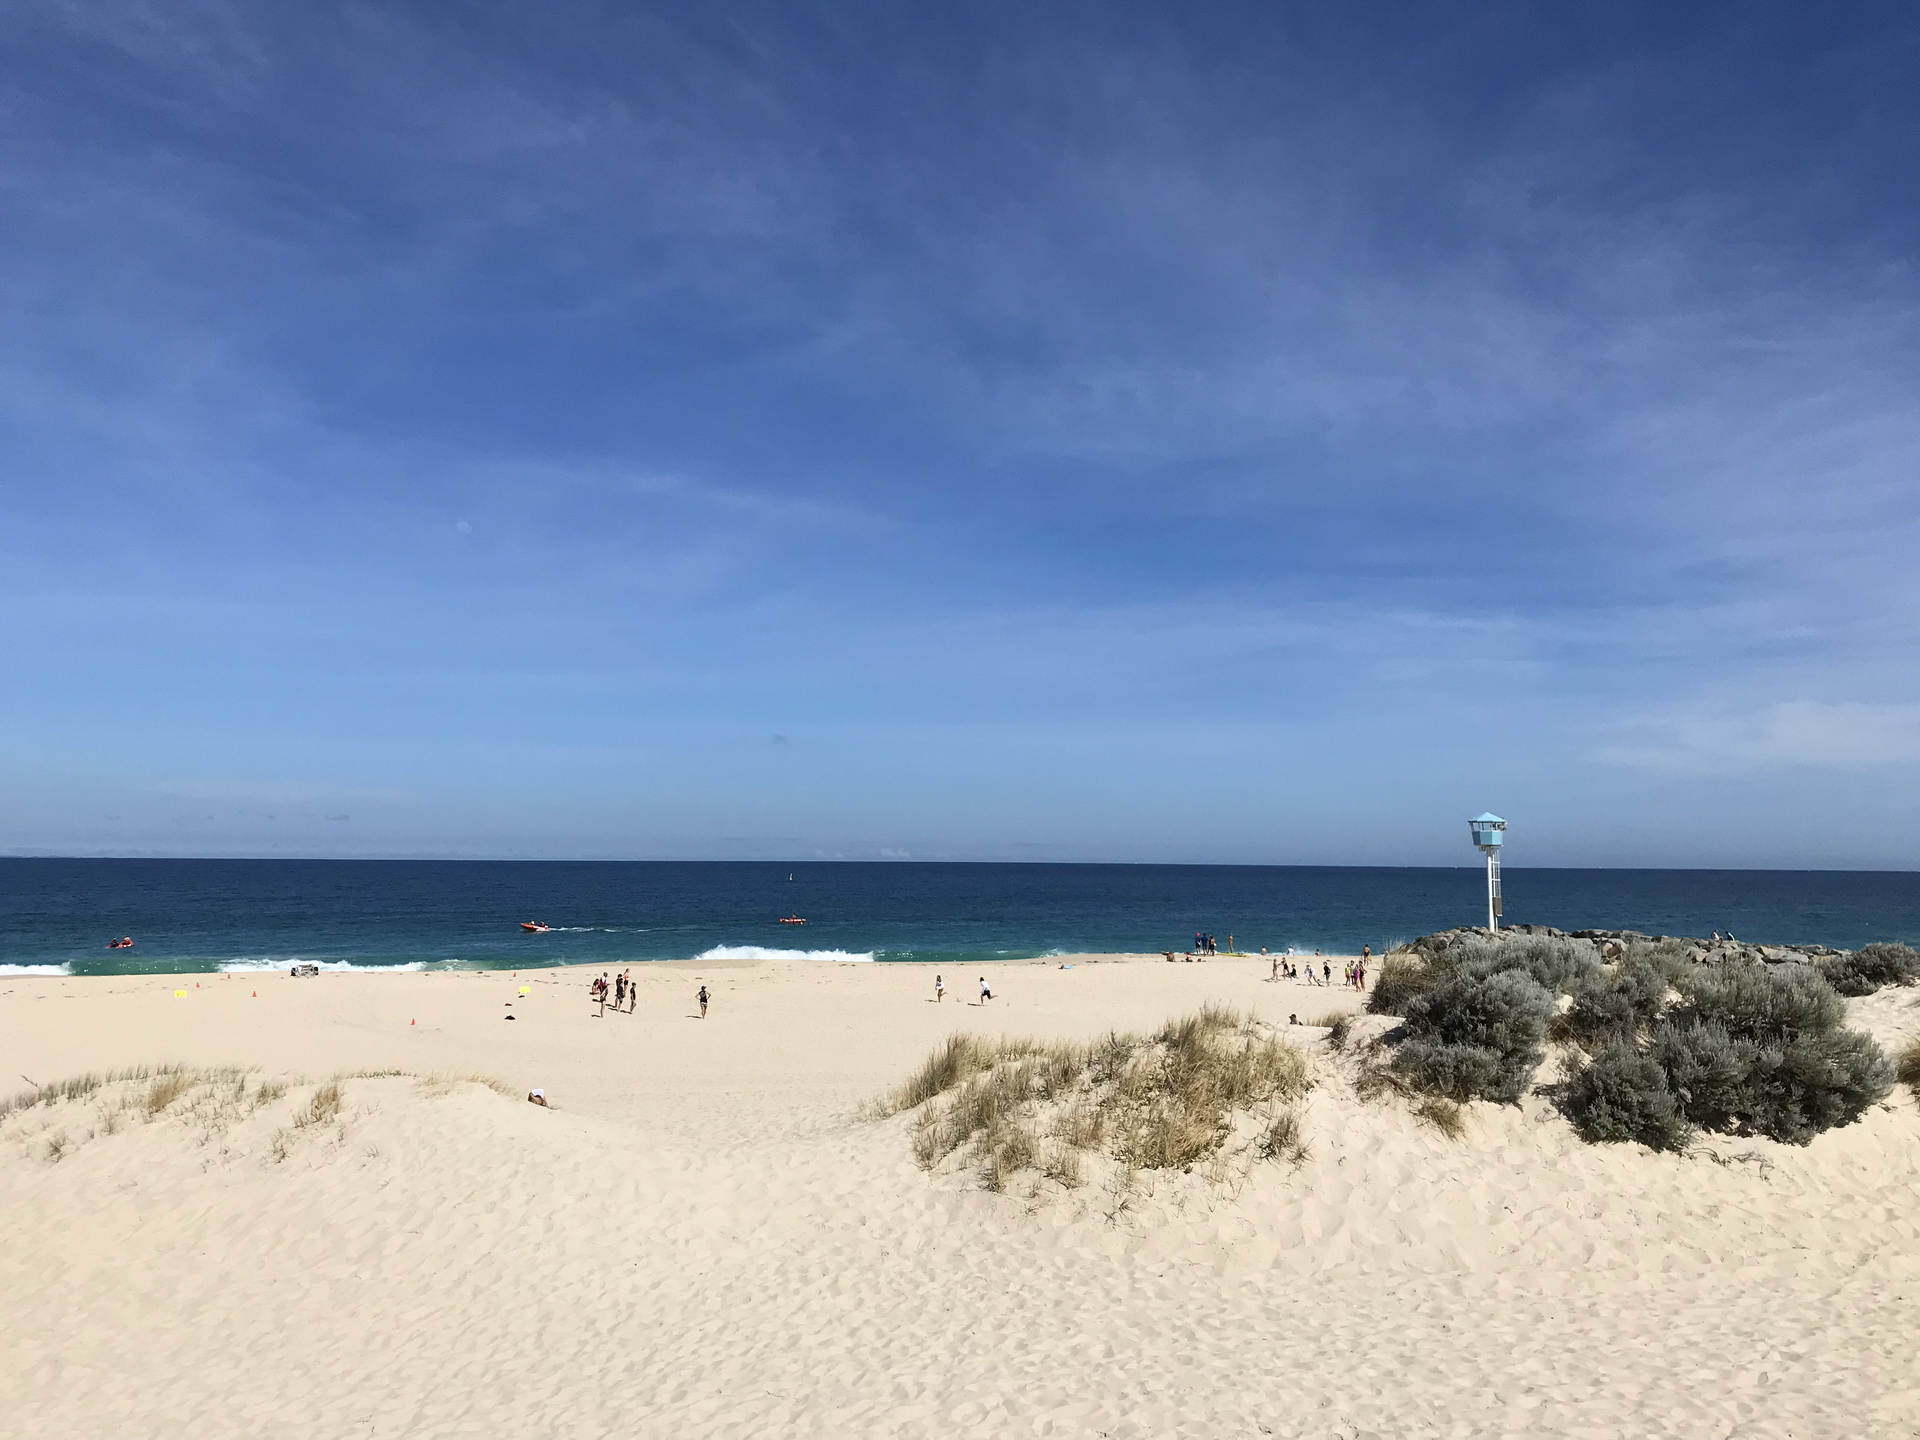 Австралийские пляжи - Перт (Австралия) Australia beaches (Perth) the most awful in the world